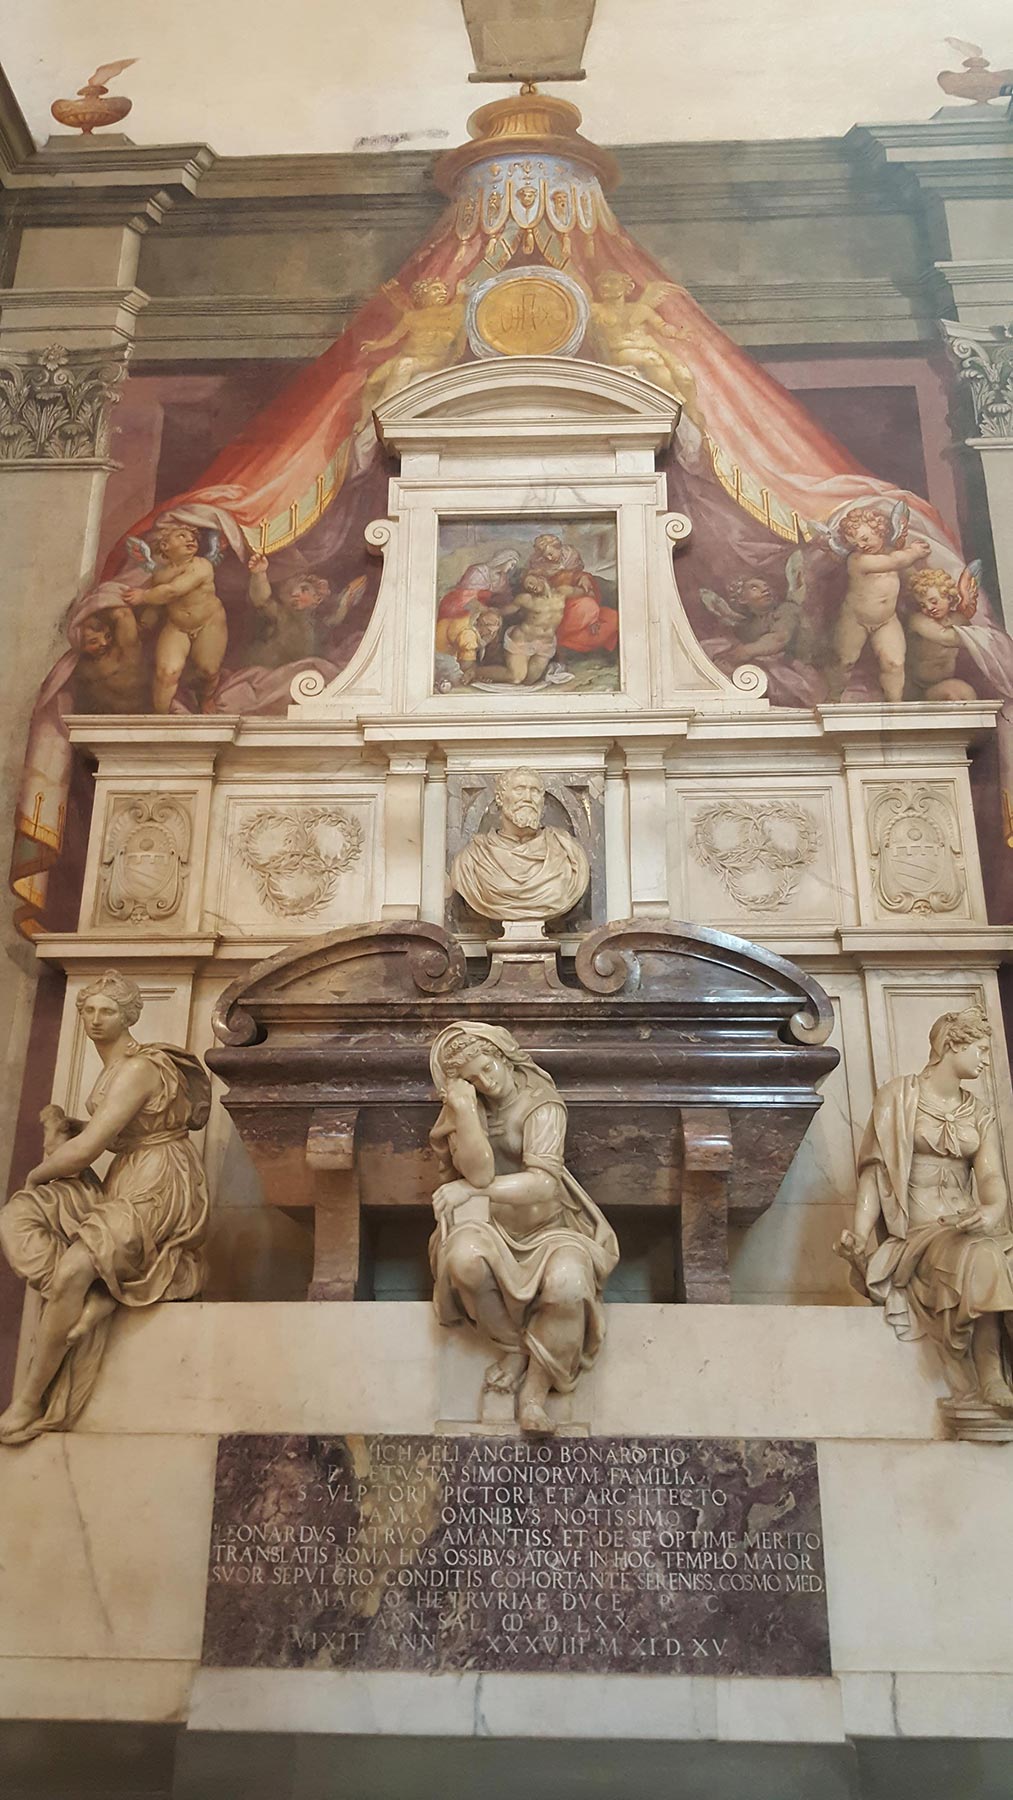 Church of Santa Croce, where Michelangelo is buried